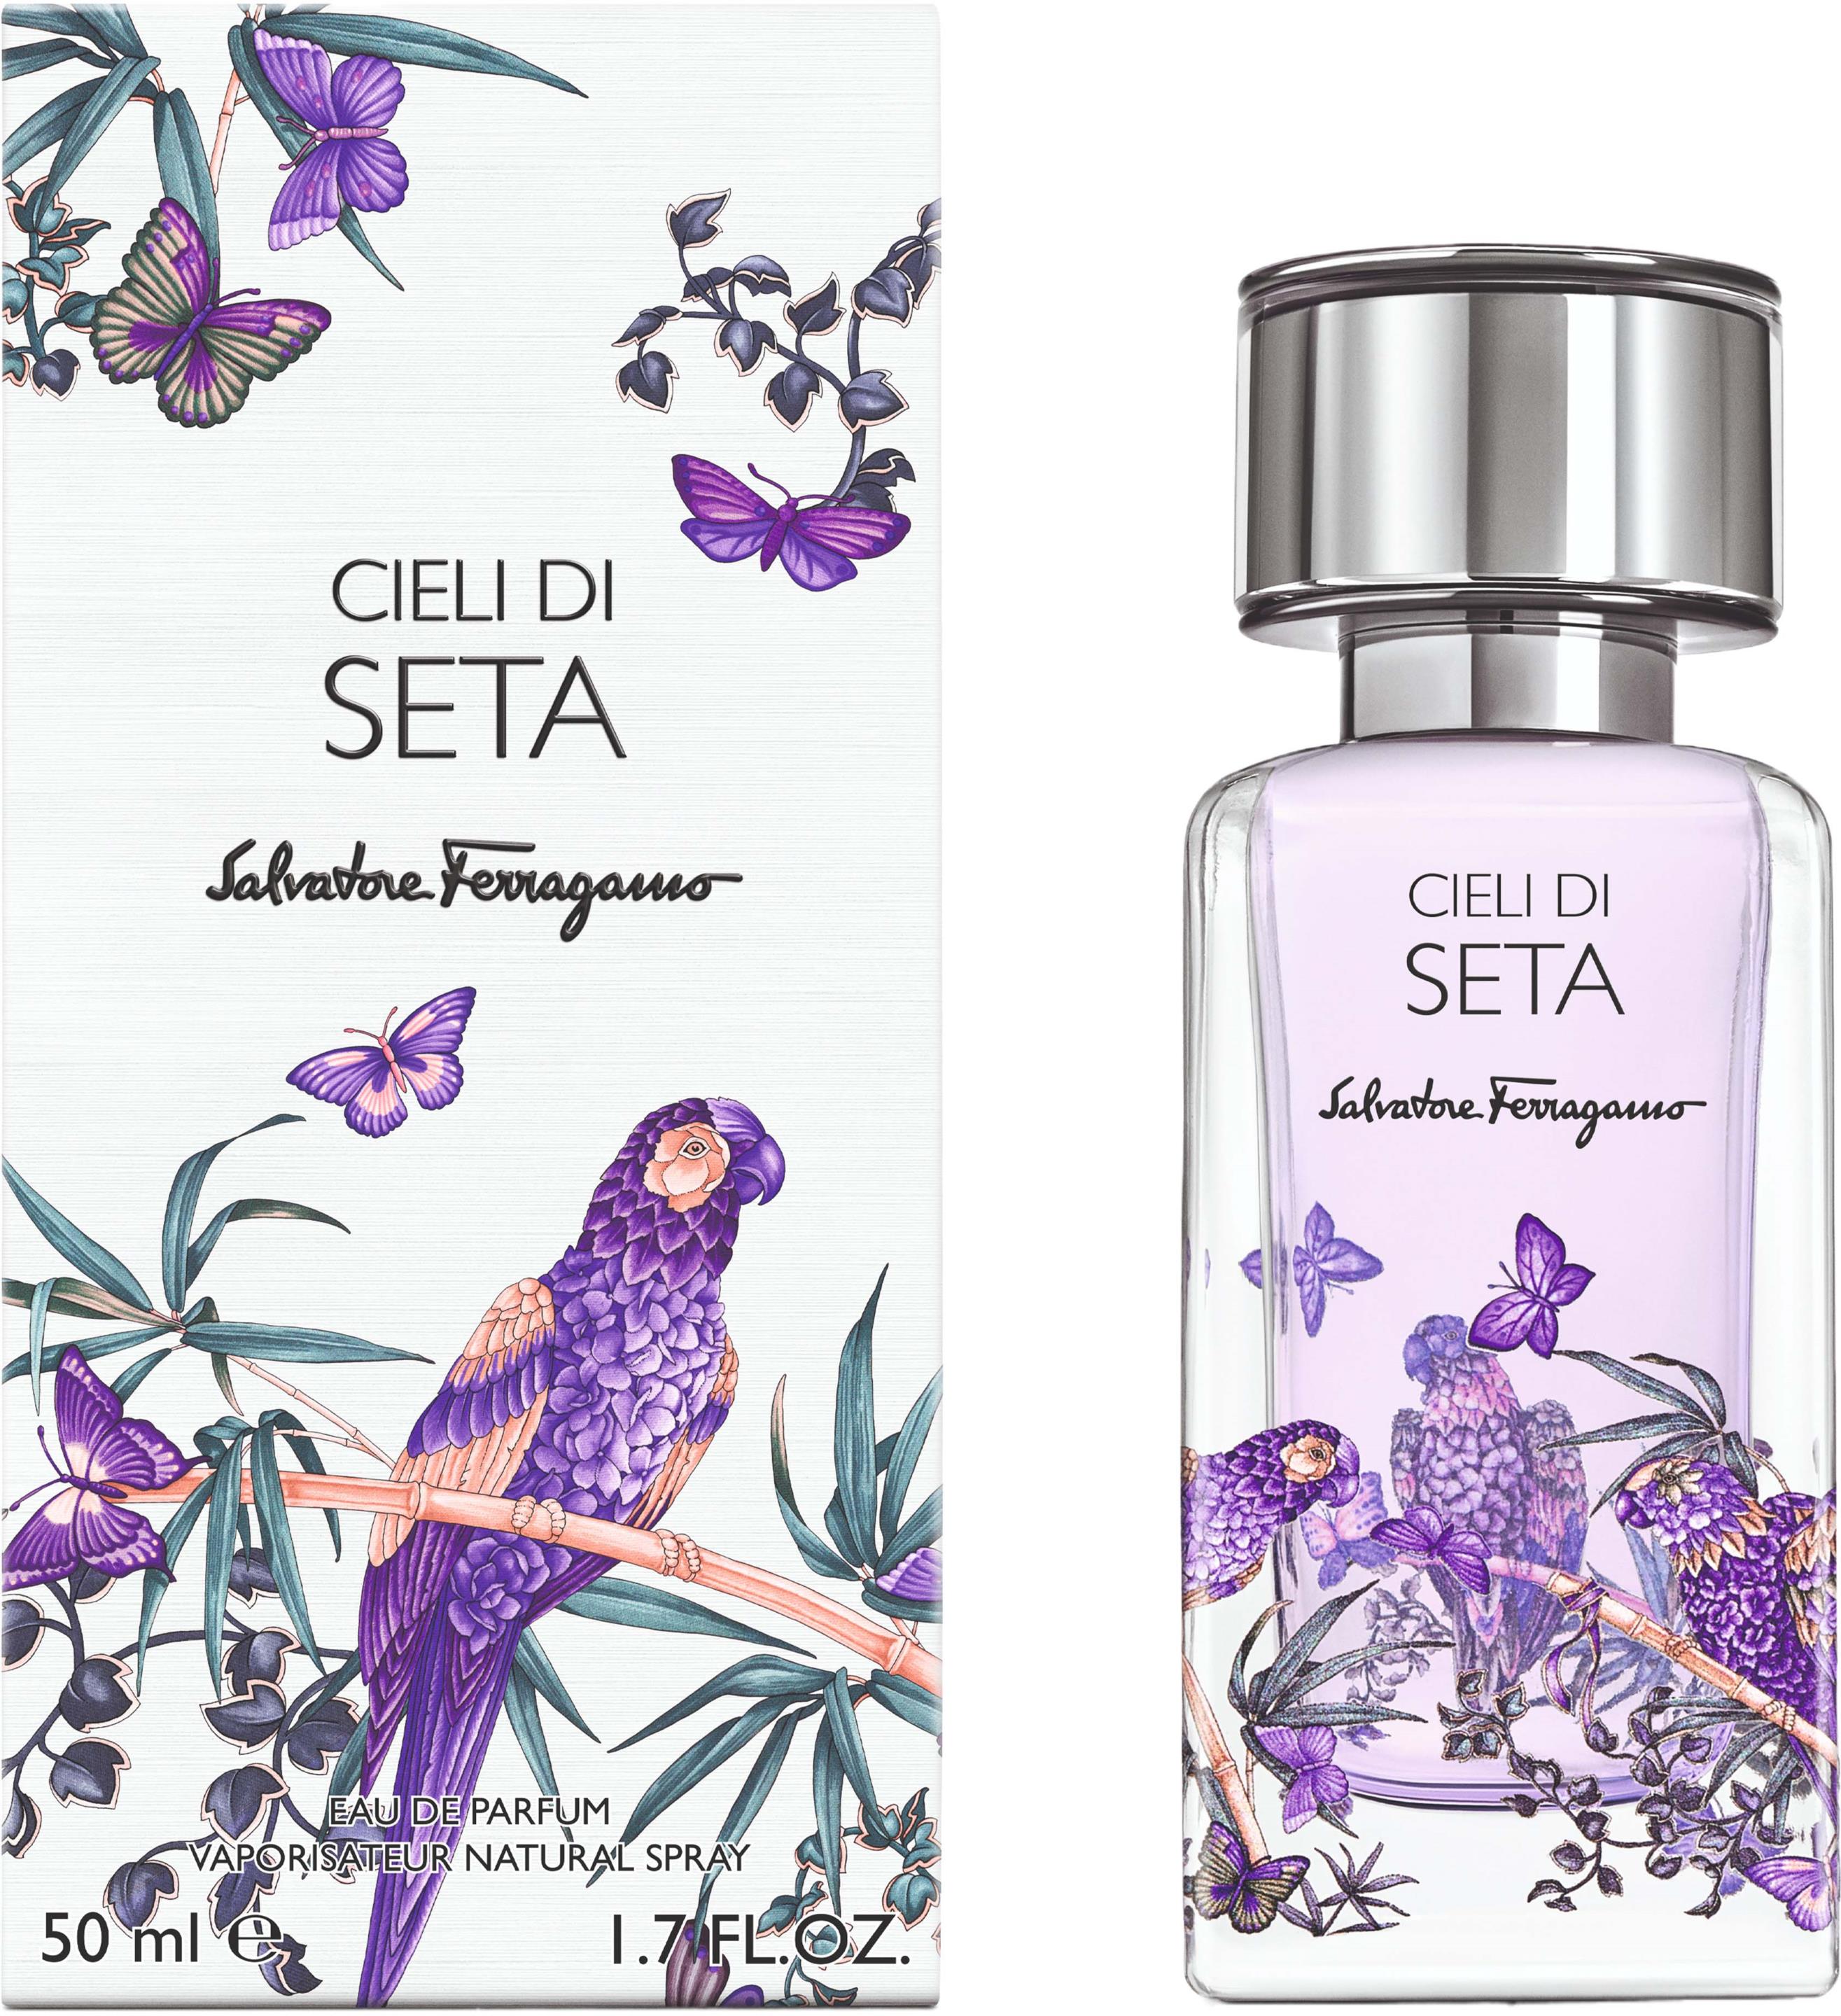 Salvatore Ferragamo Cieli Di Seta Eau de Parfum 50 ml | lyko.com